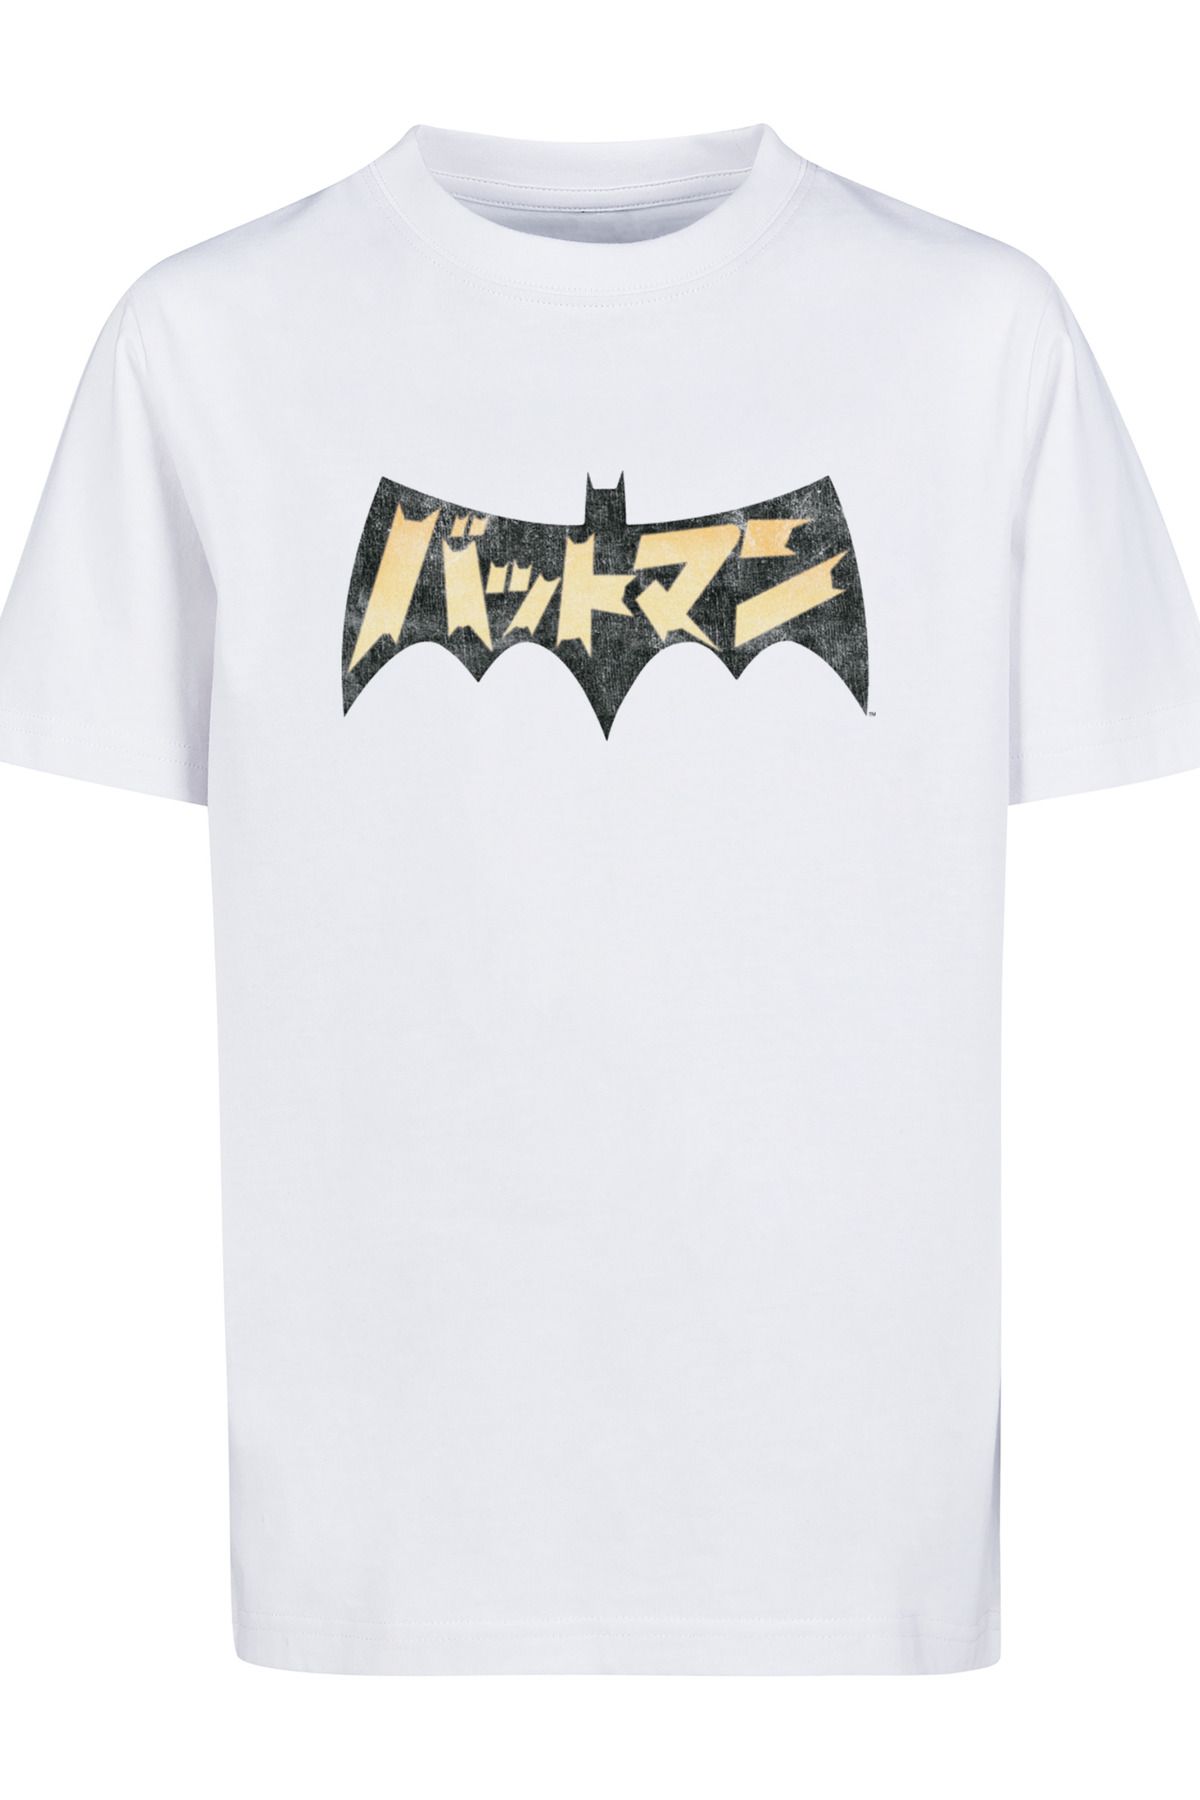 F4NT4STIC Kinder Basic Kids Comics Logo-WHT DC T- mit Trendyol International Batman Shirt 